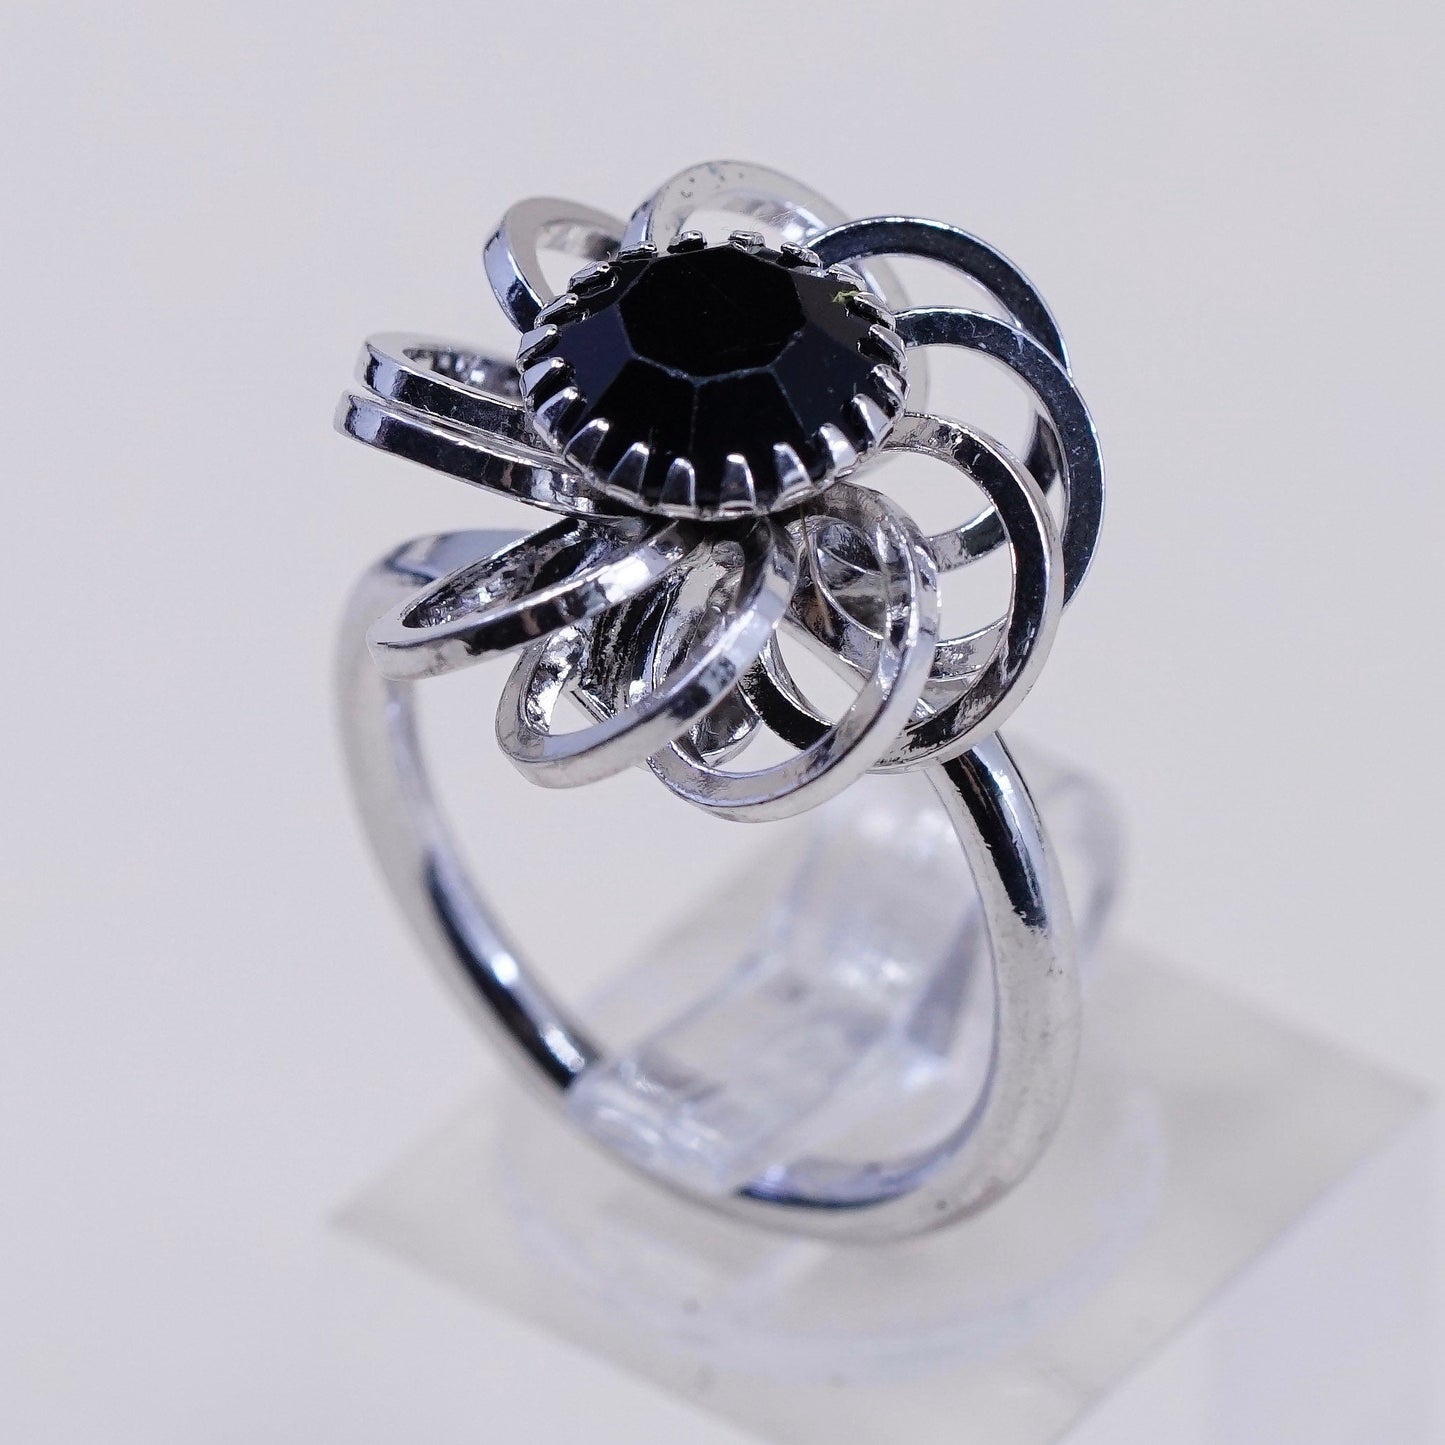 Size 6.5, vtg Sarah COV silver tone ring, flower w/ black glass details